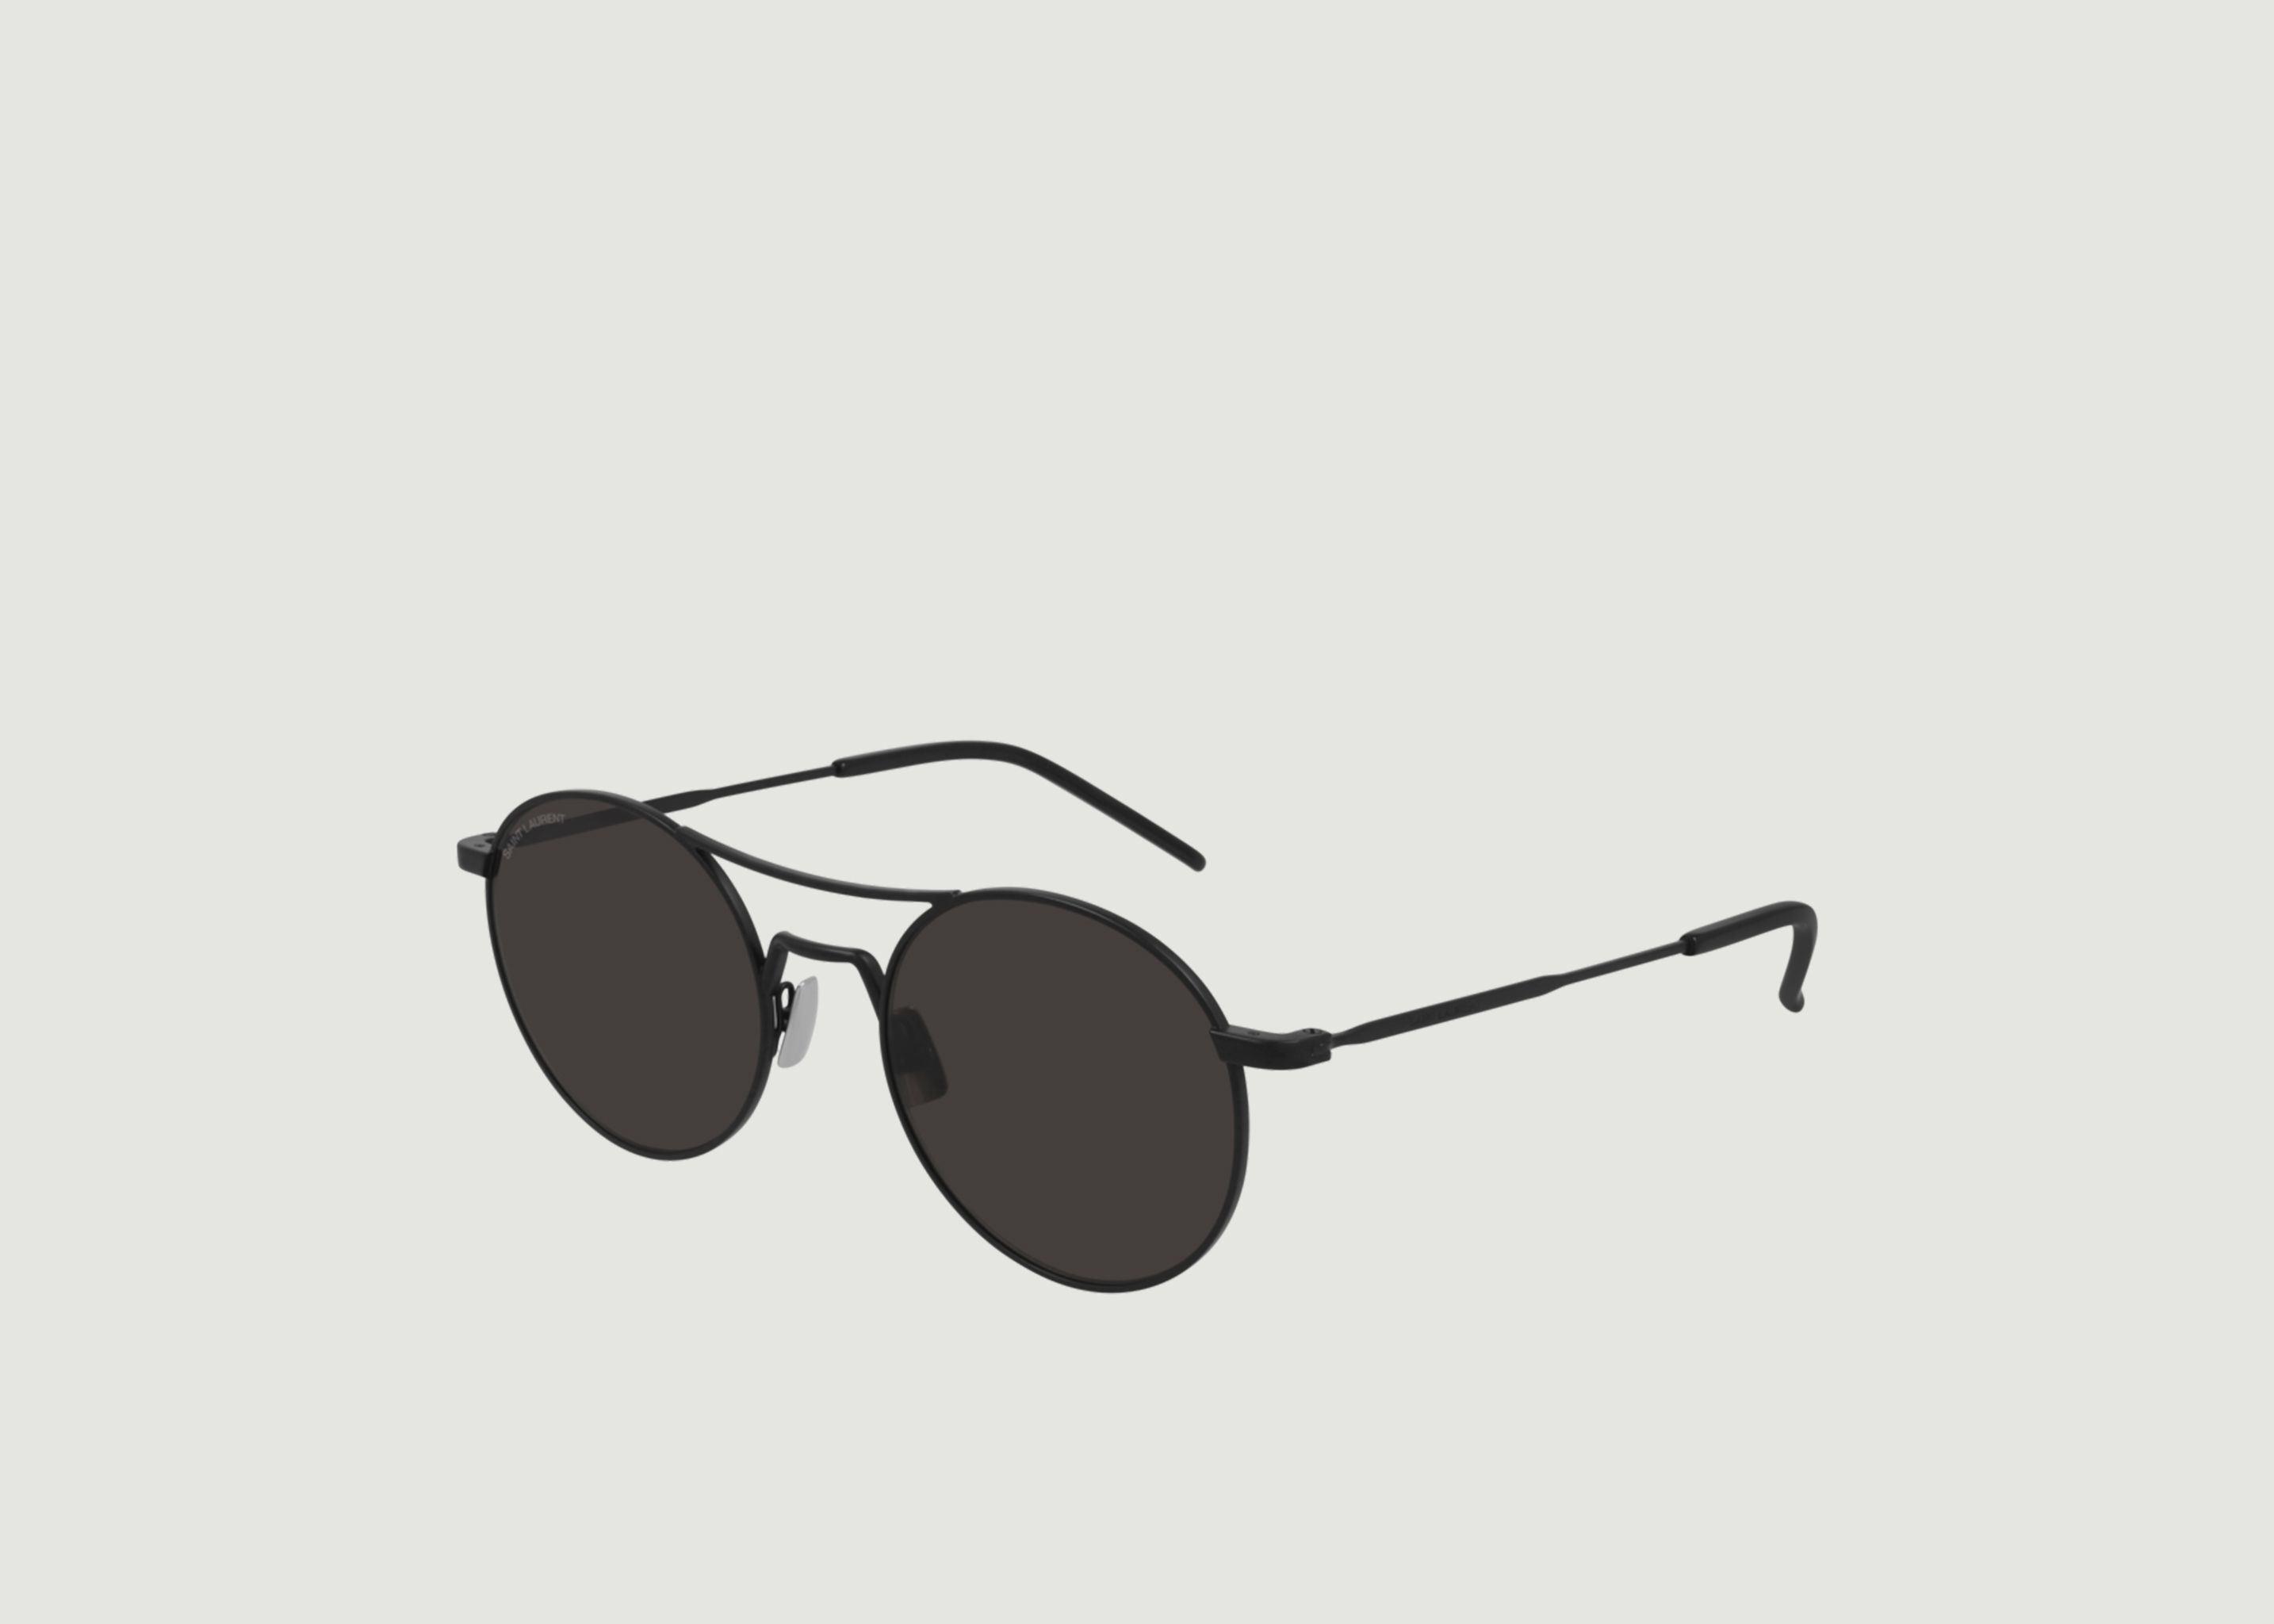 Aviator Sunglasses with round frames - Saint Laurent